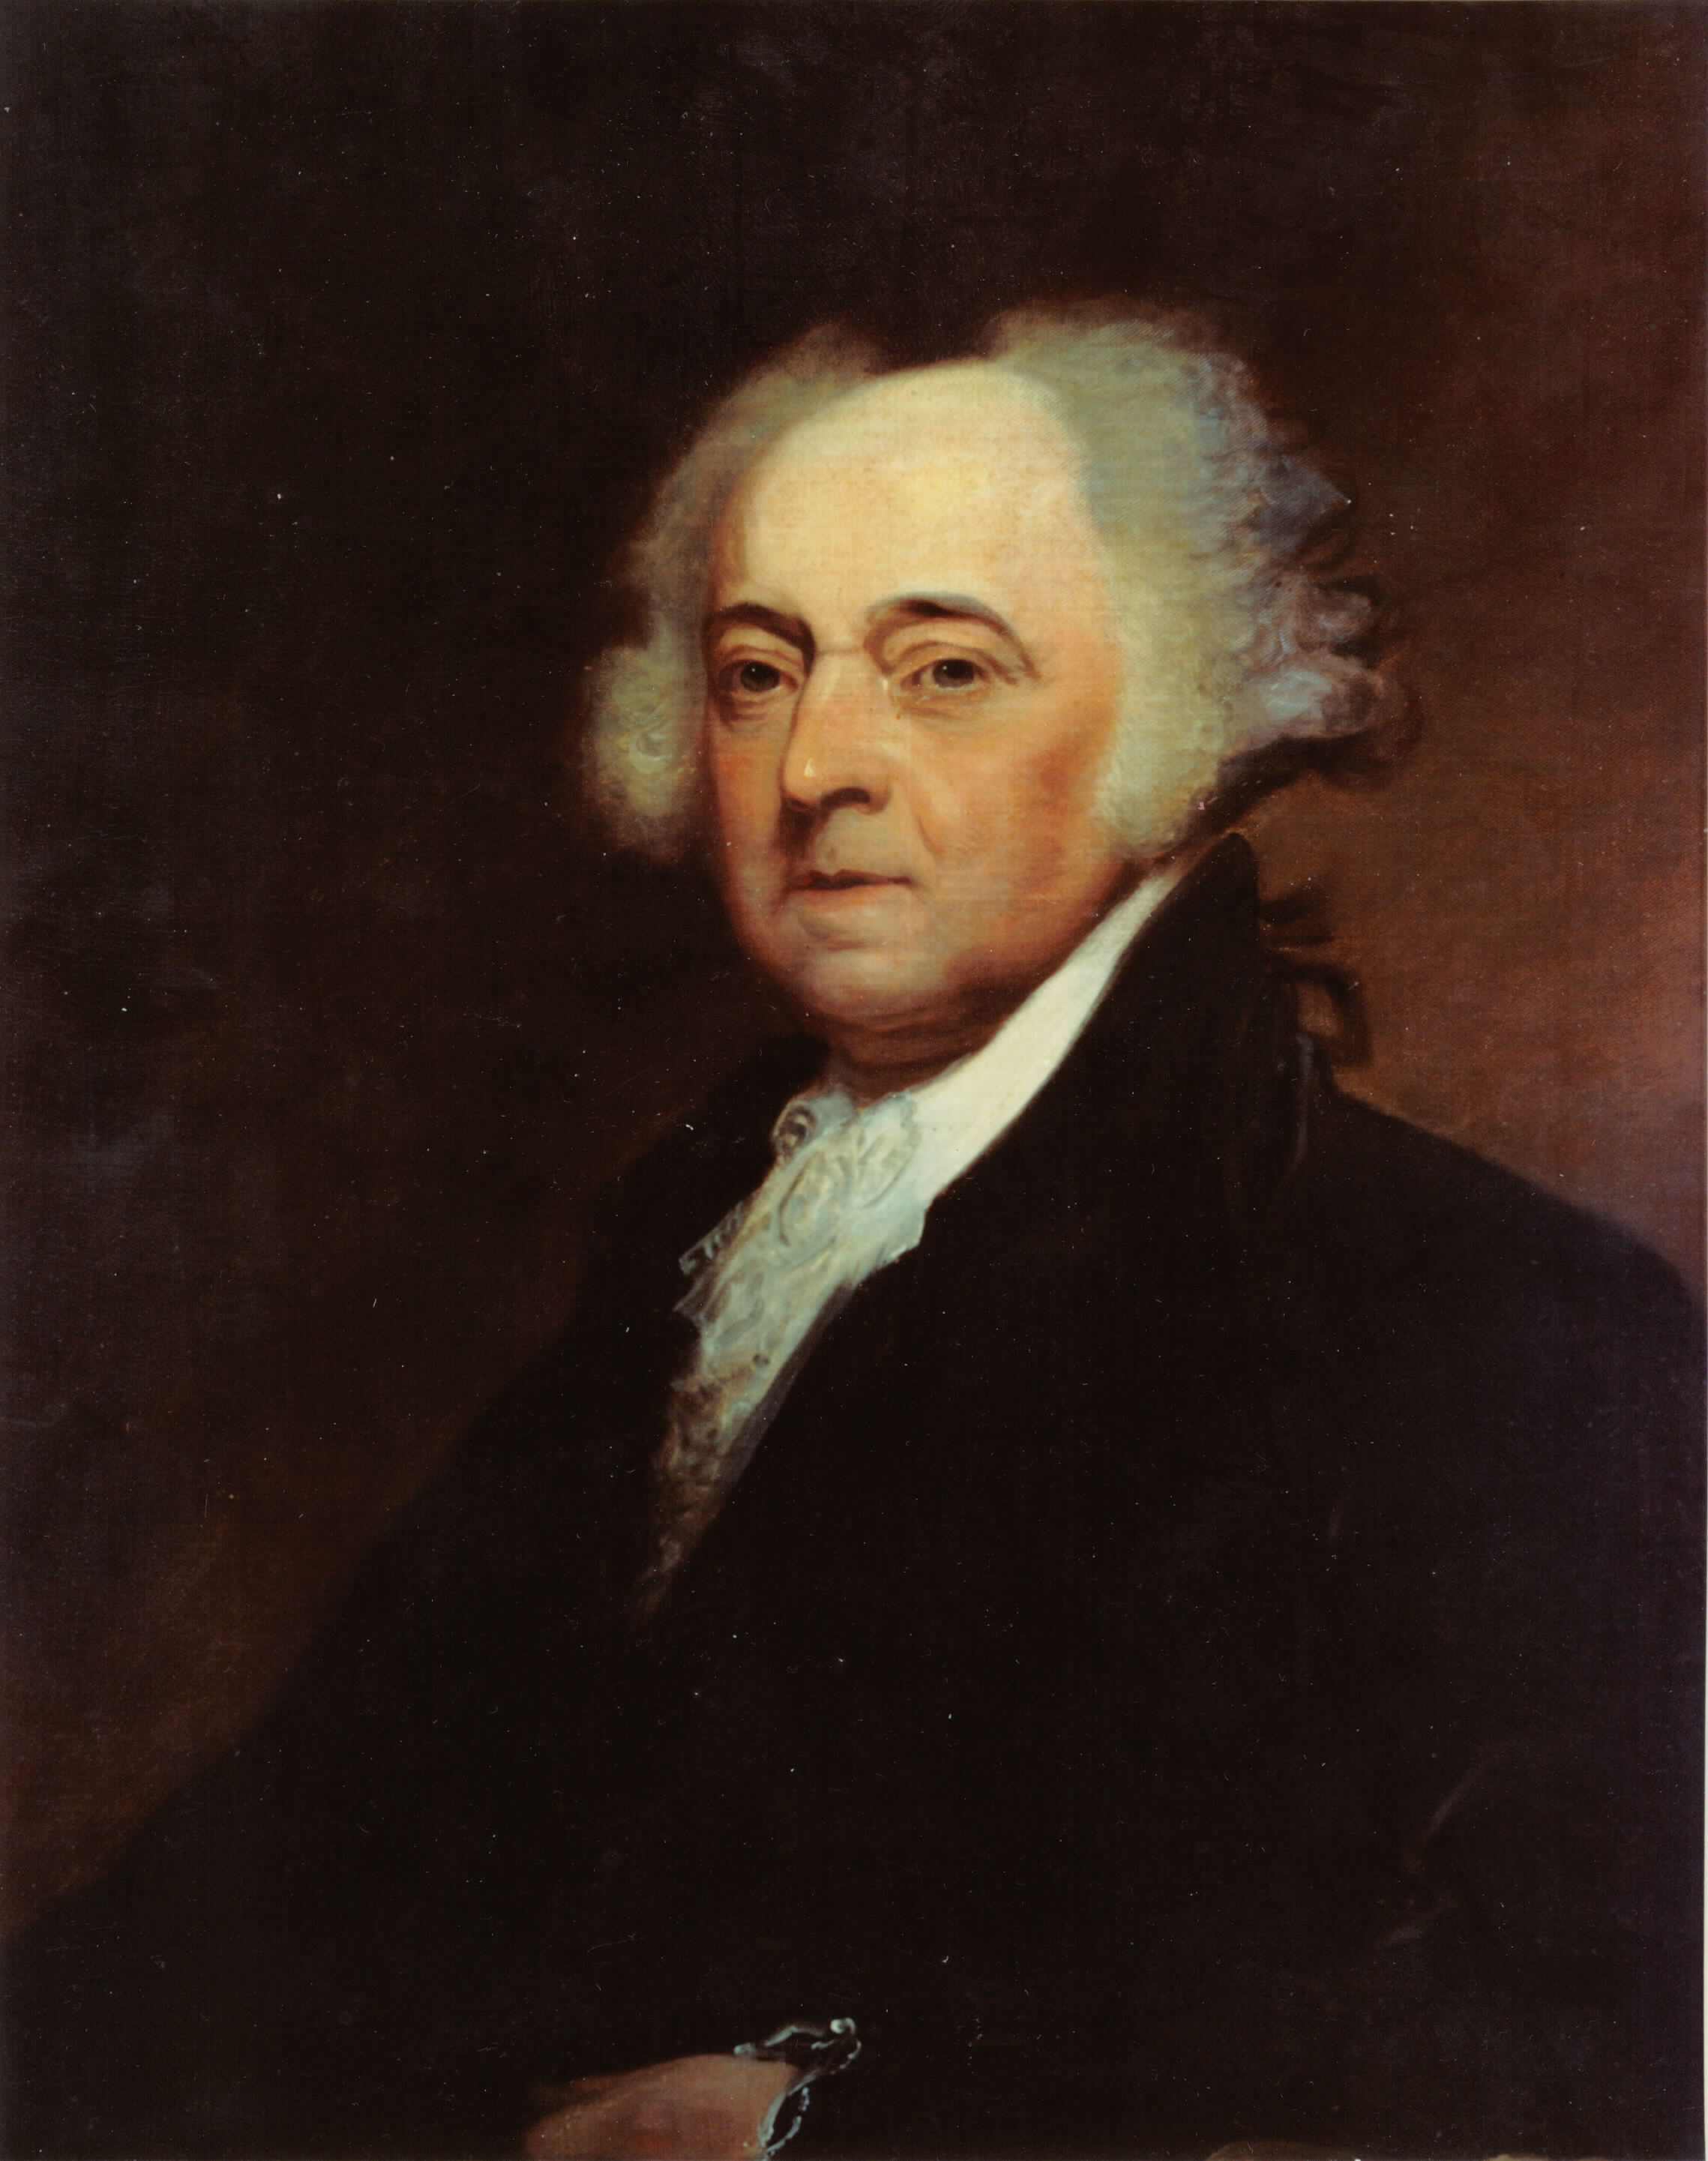 About John Adams